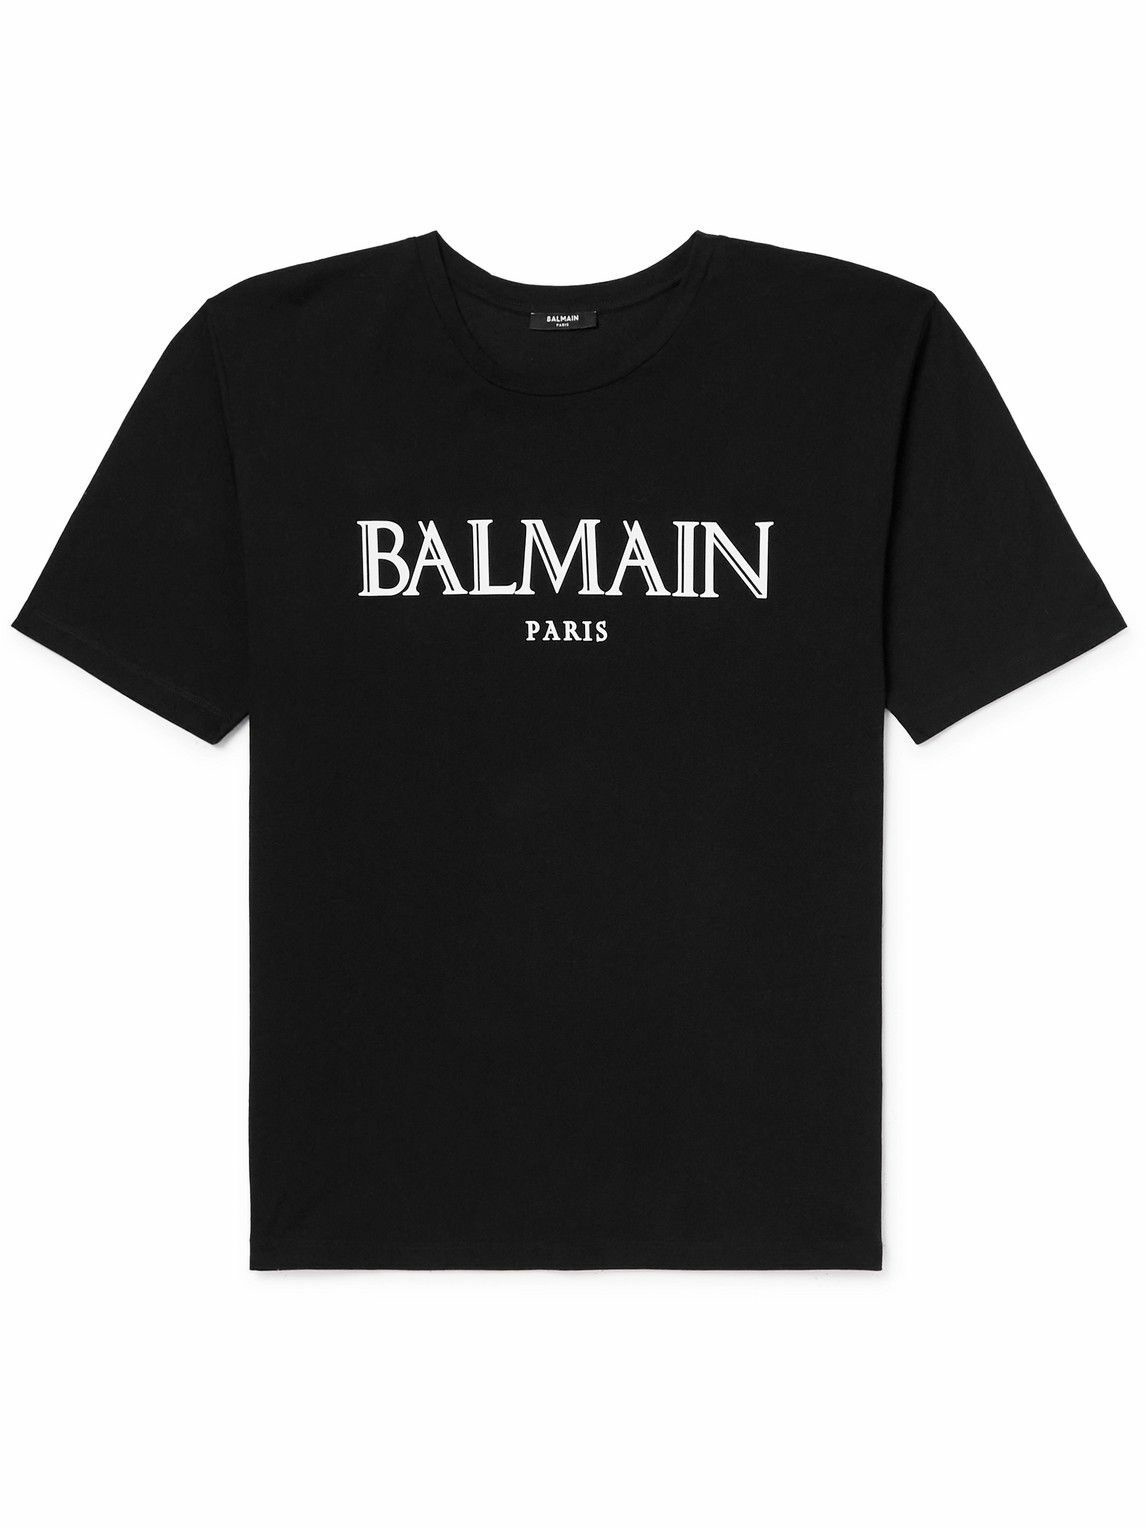 Balmain - Logo-Appliquéd Cotton-Jersey T-Shirt - Black Balmain